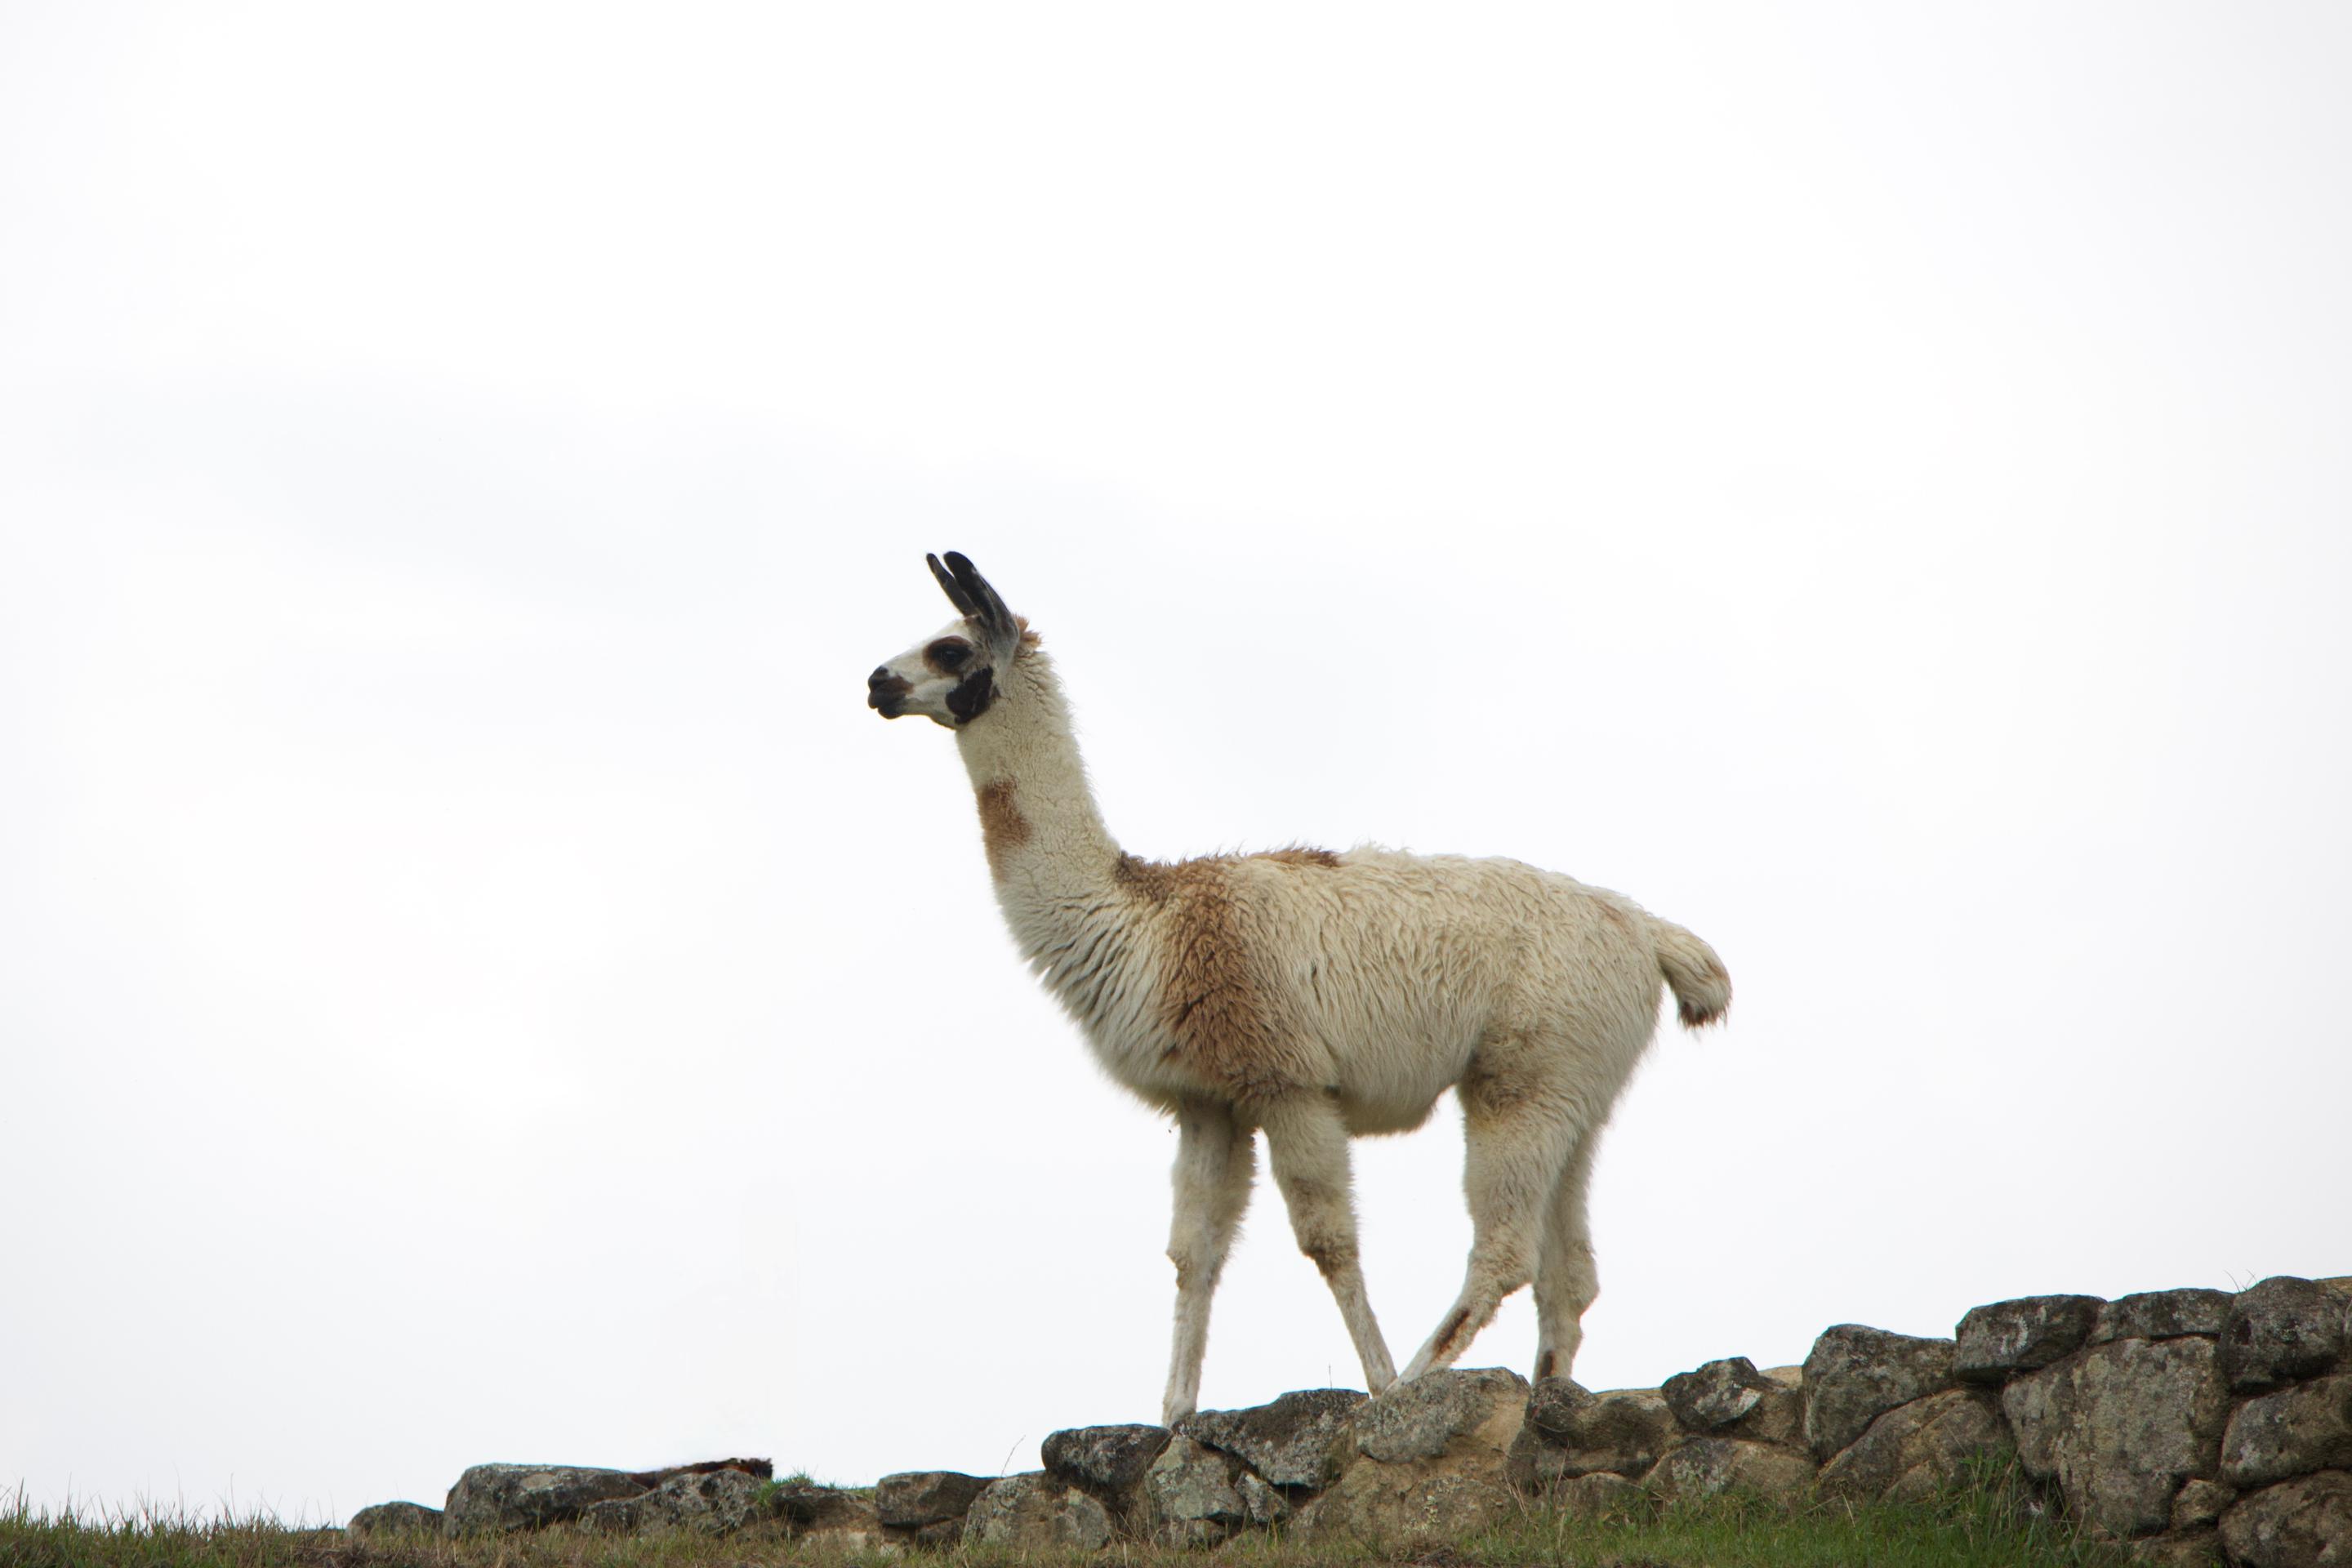 A white llama at Machu Picchu